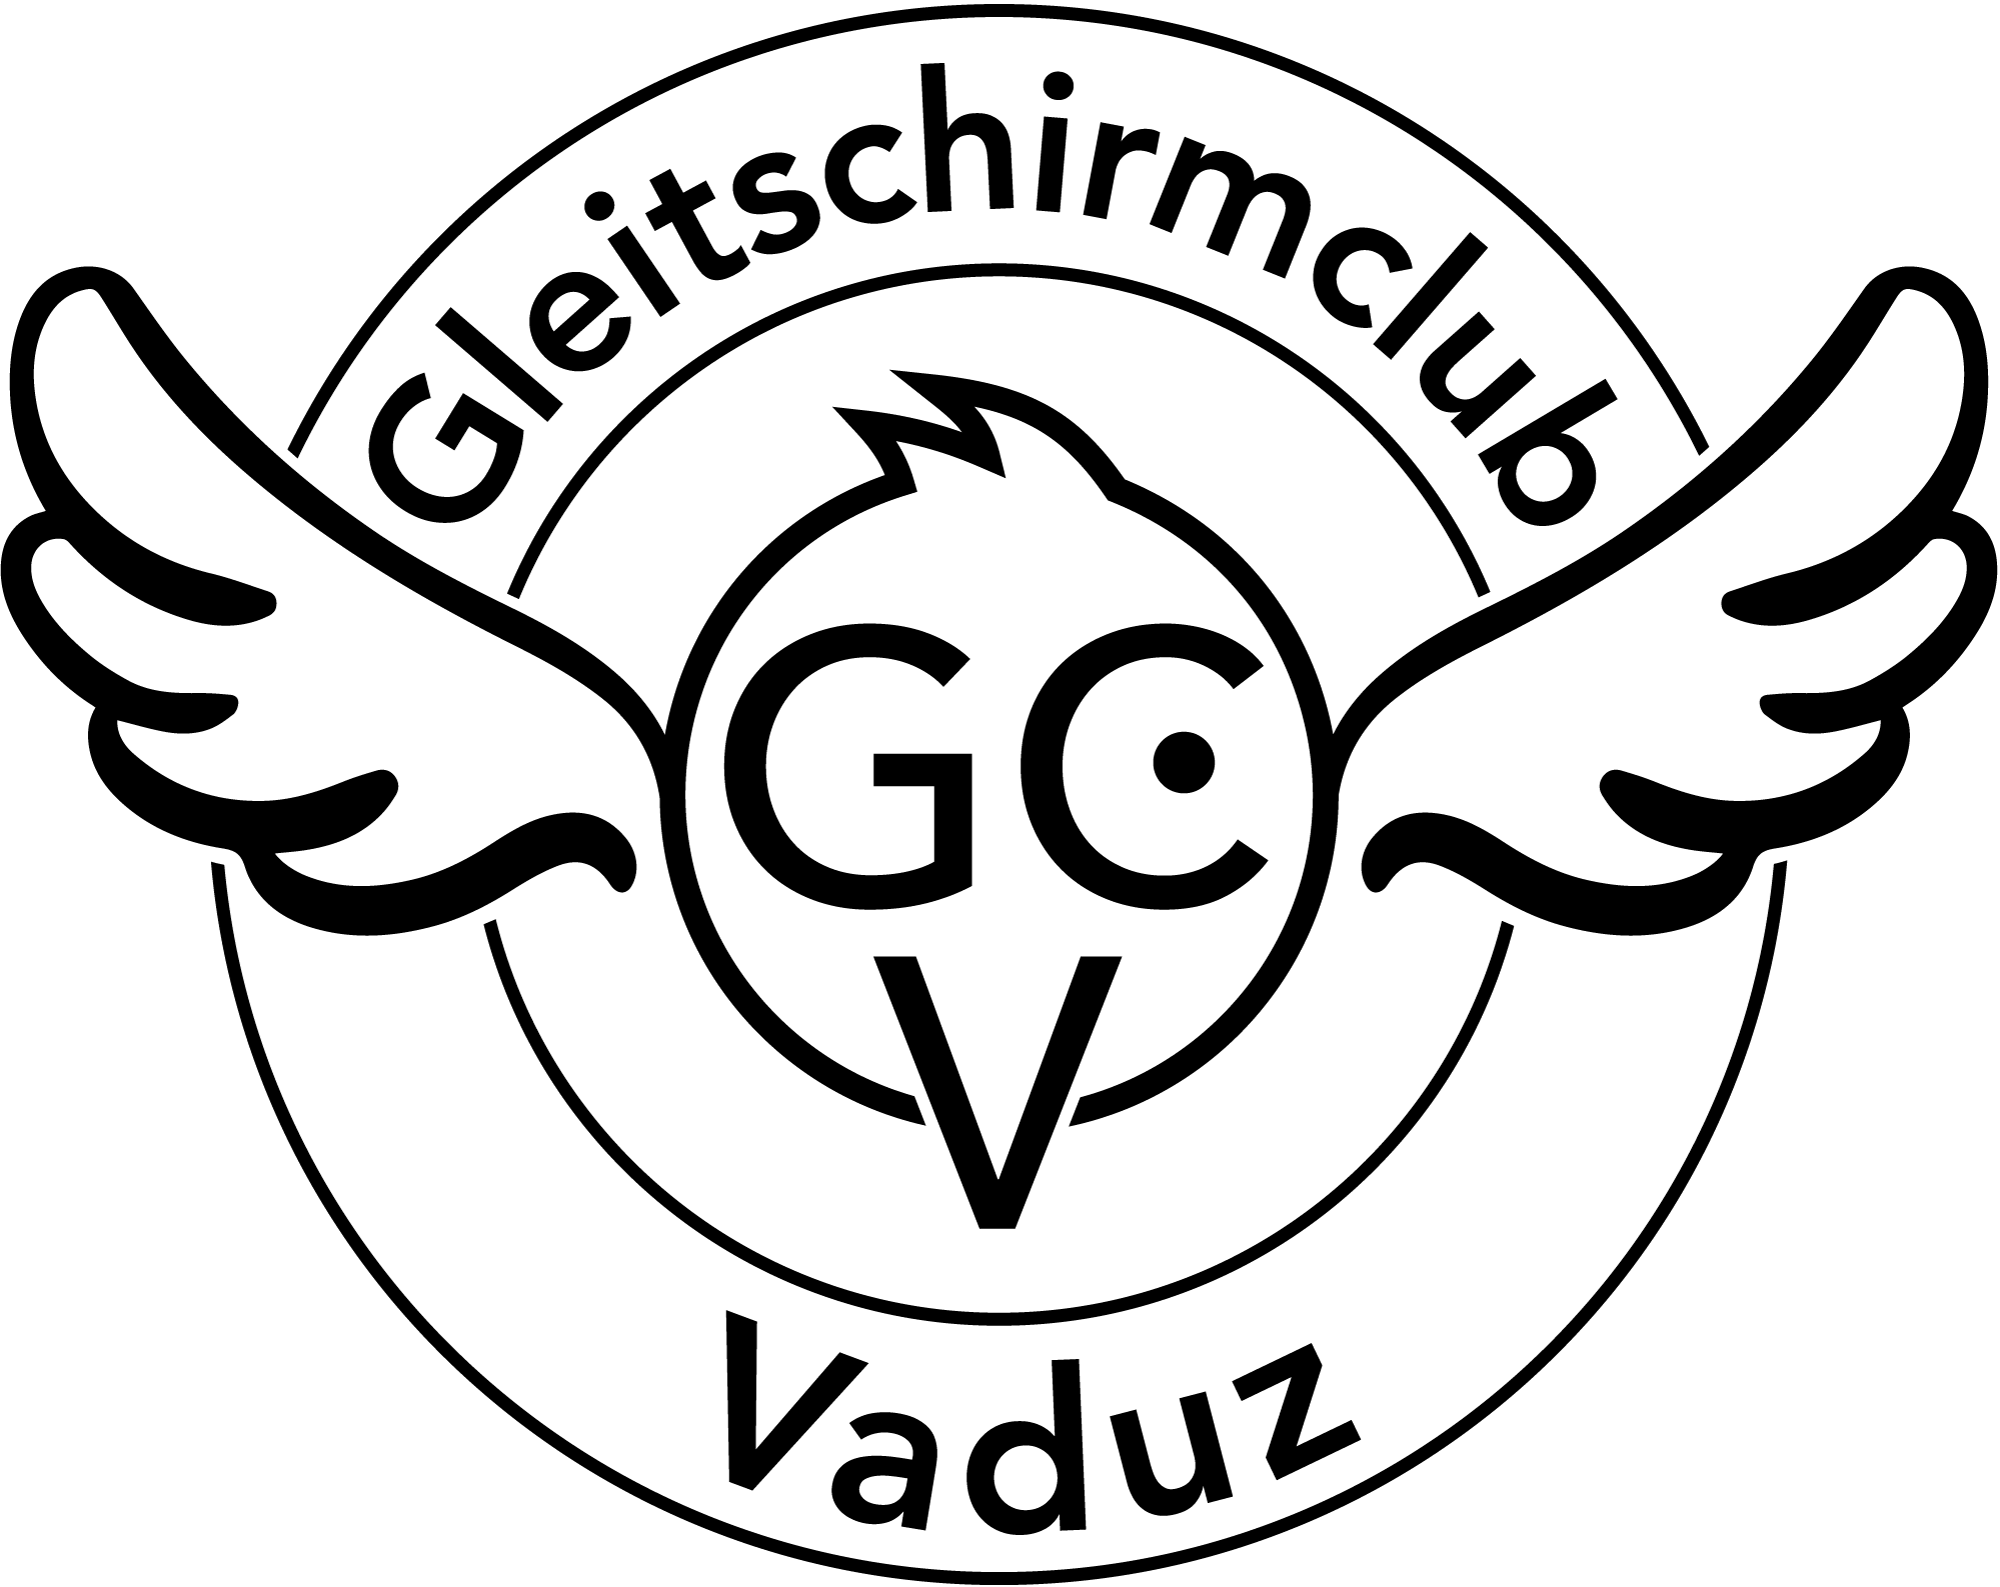 (c) Gleitschirmclubvaduz.li